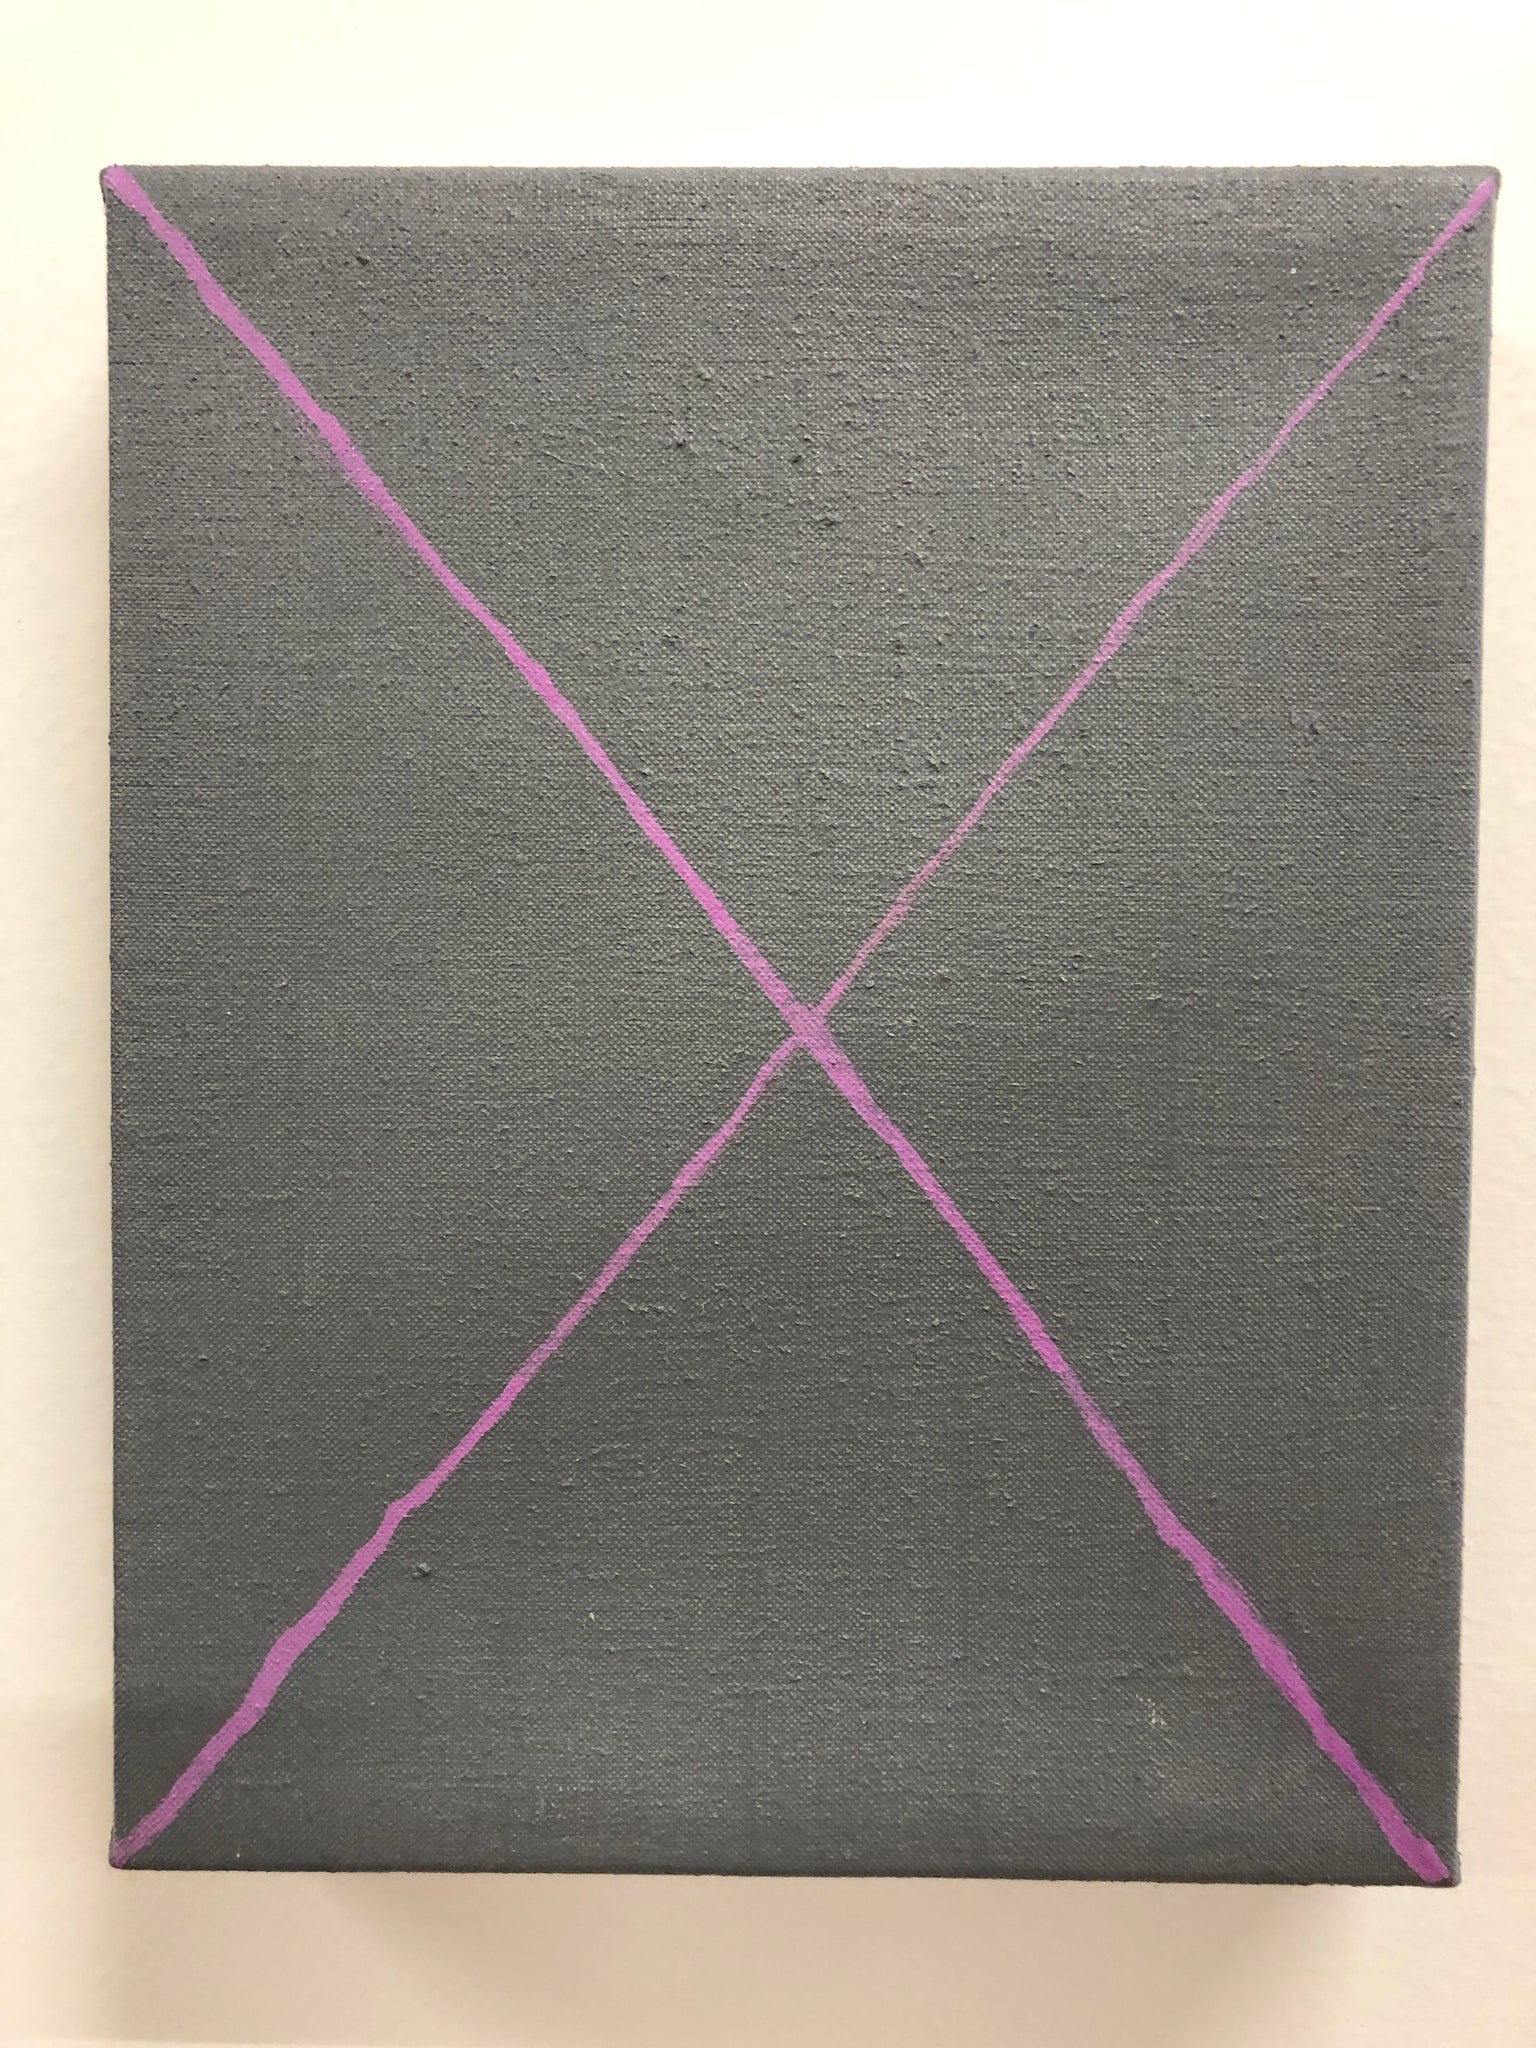 Kirstin Lamb, "X Painting"